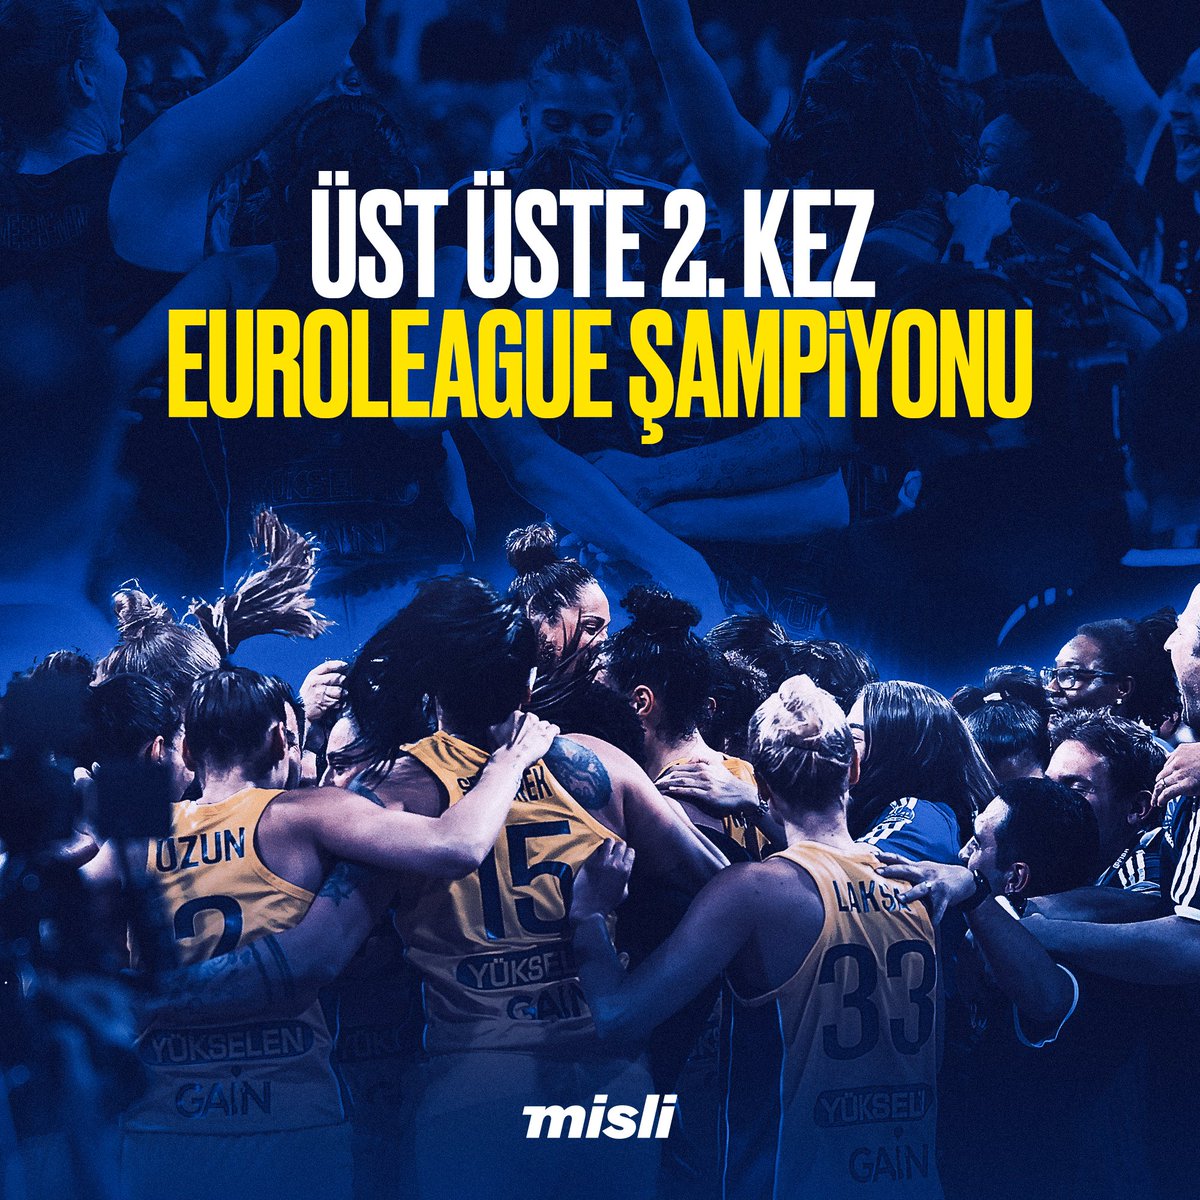 Fenerbahçe, EuroLeague Women’da üst üst 2. kez şampiyon! 🏆